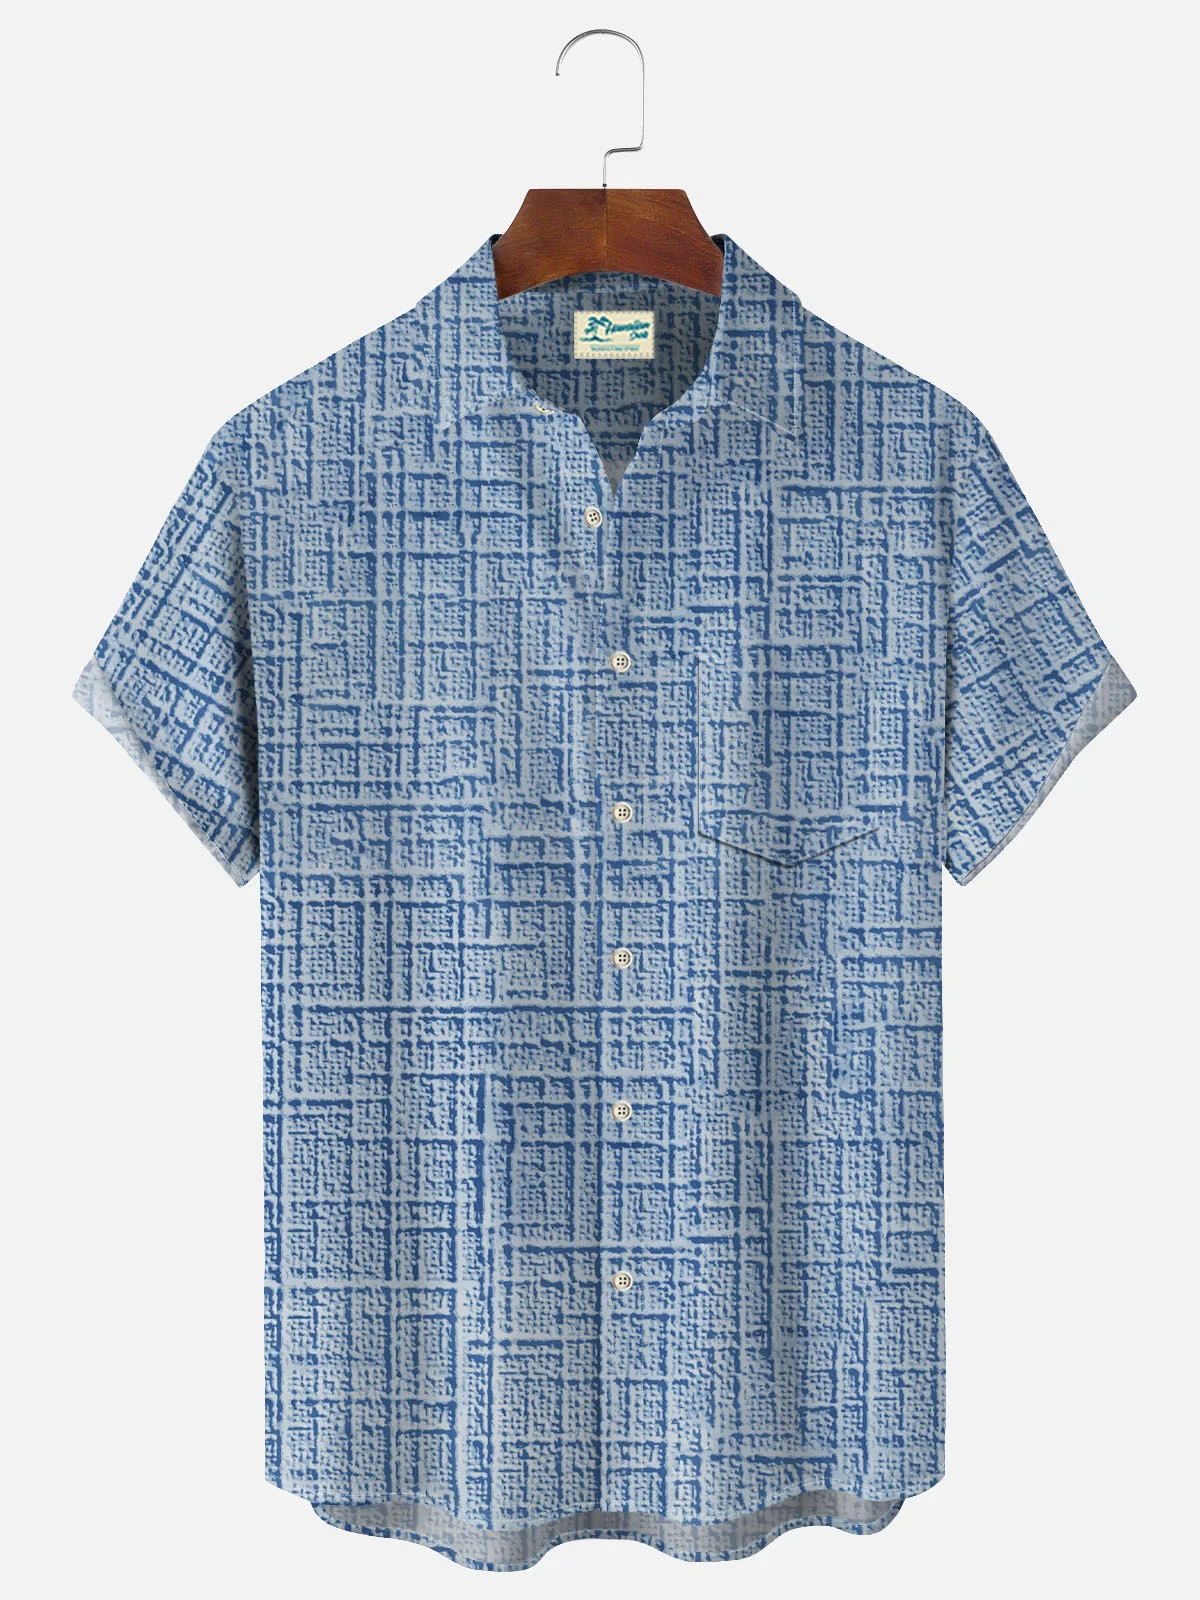 Royaura Vintage Checkered Blue Men's Seersucker Camp Shirts Stretch Anti-Wrinkle Easy Care Pocket Button Hawaiian Shirts